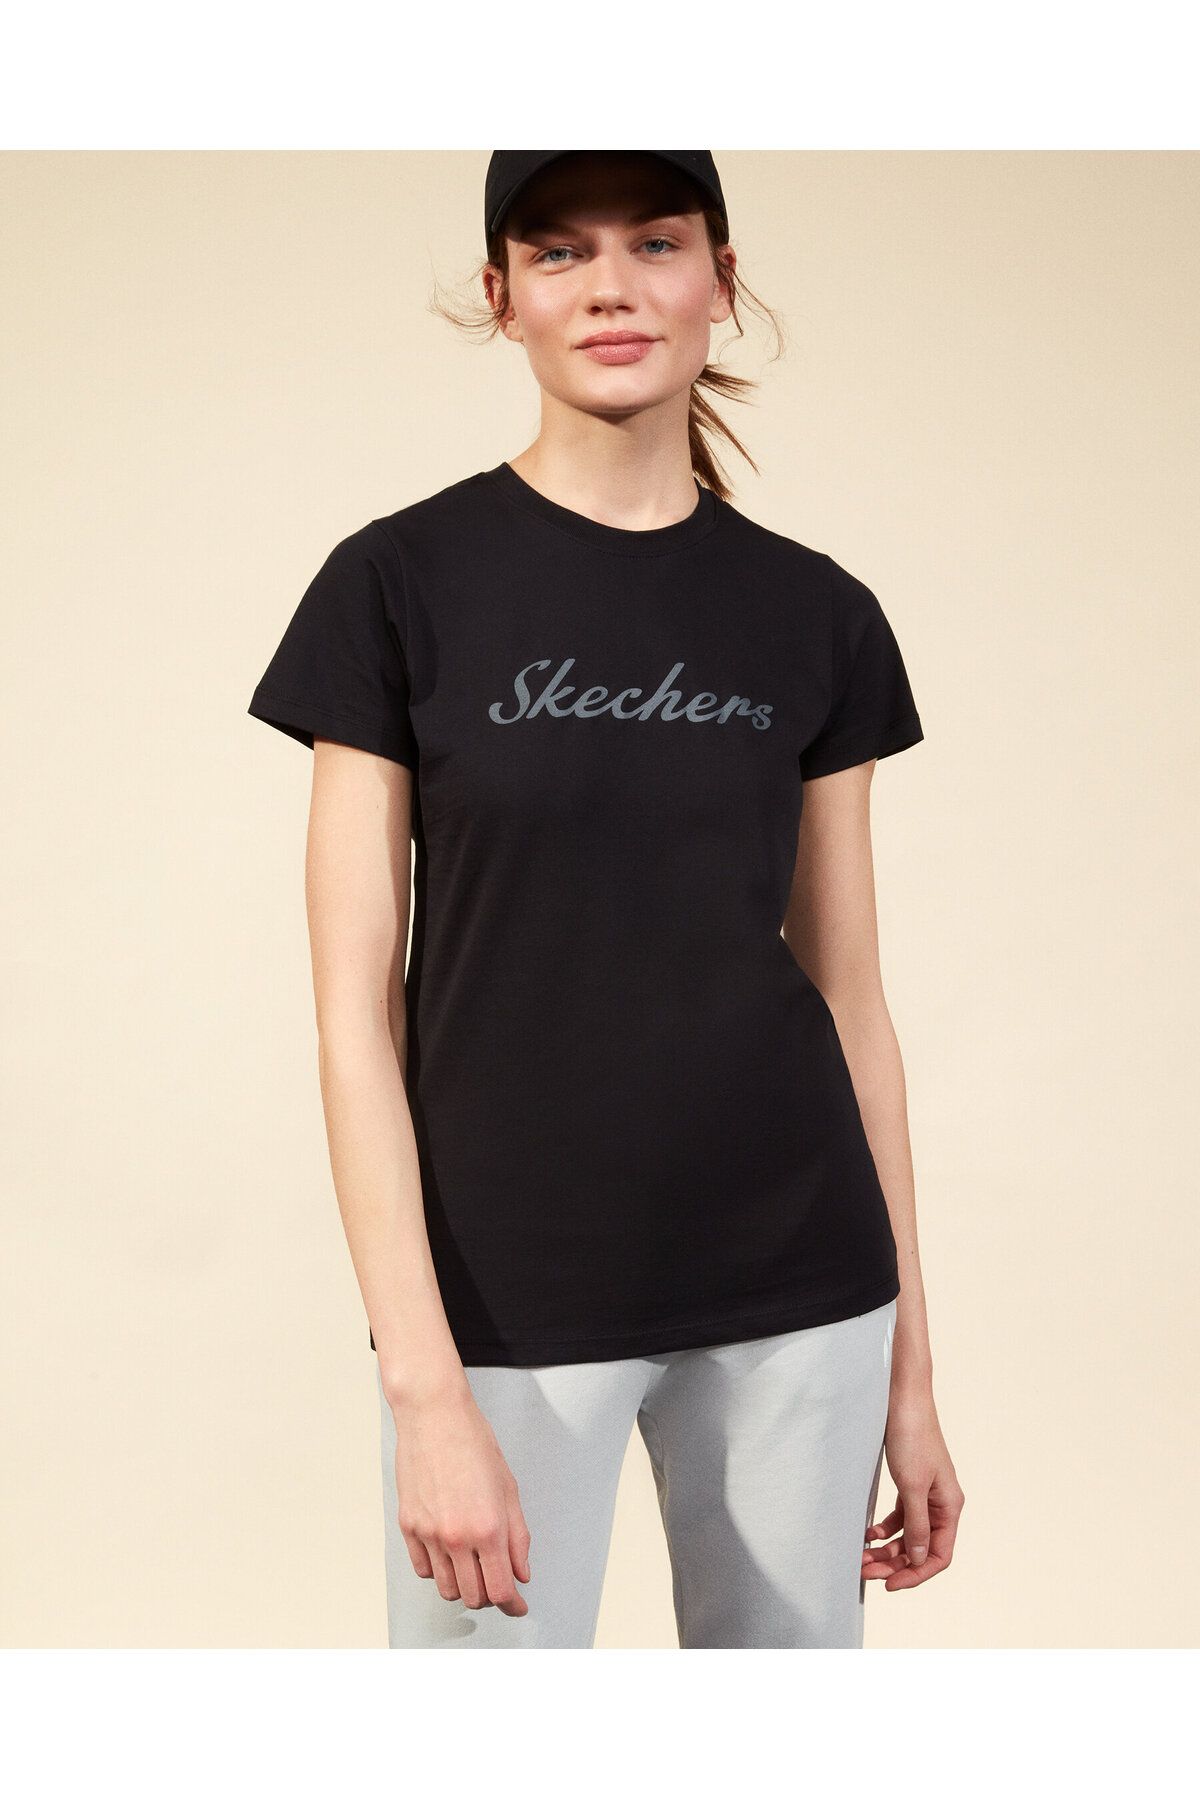 Skechers Graphic Tee W Crew Neck T-shirt Kadın Siyah Tshirt S211282-001